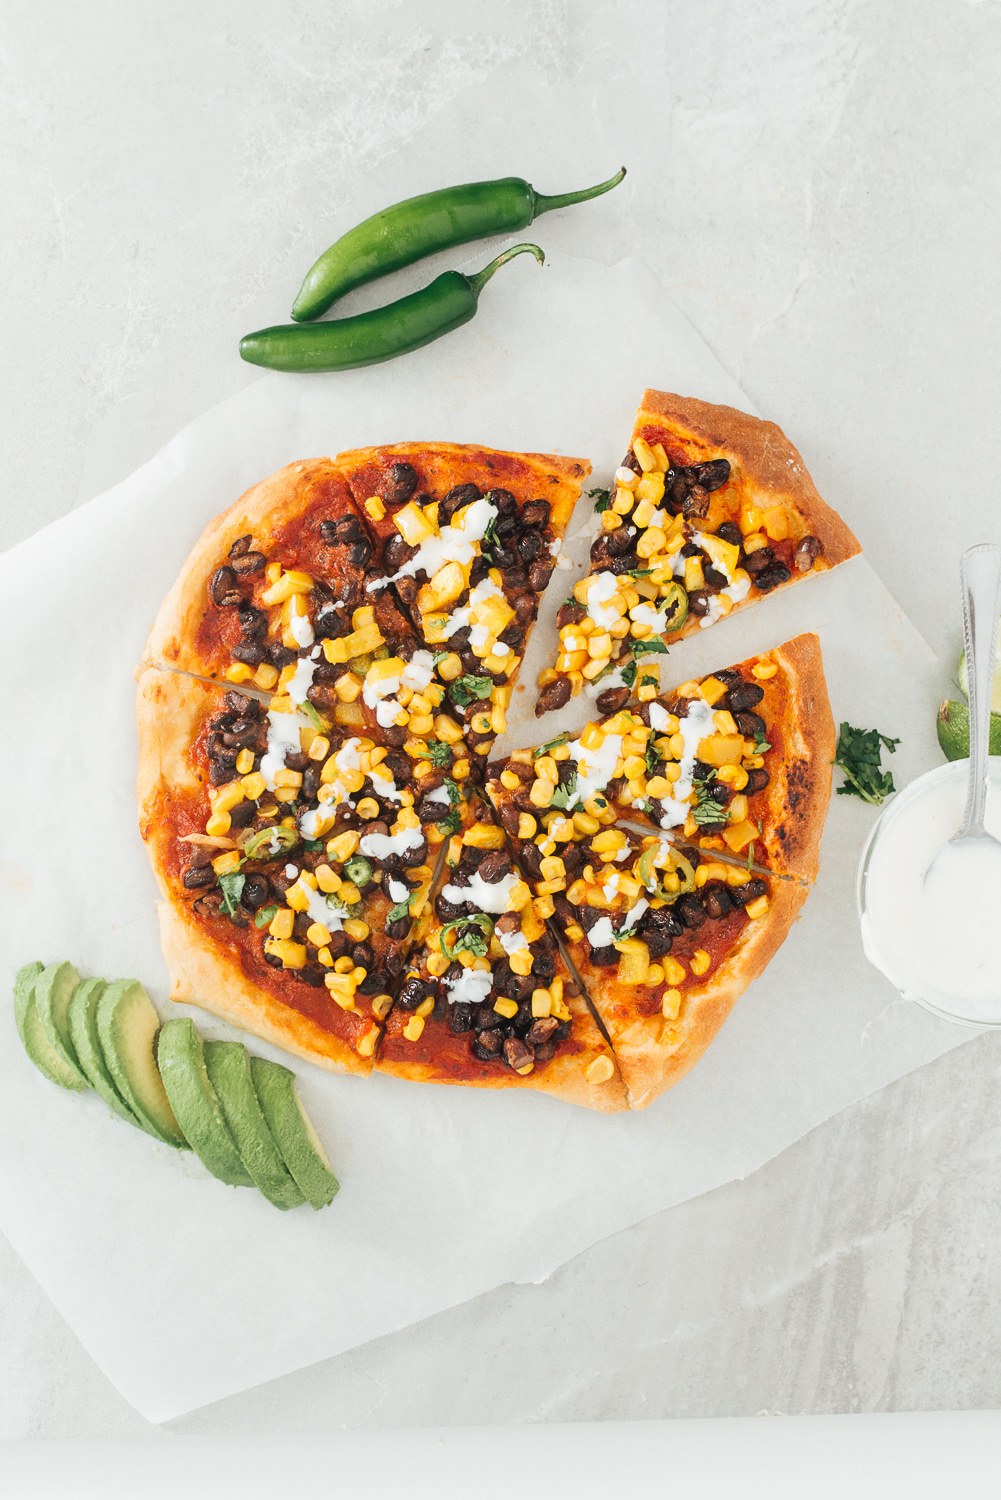 Easy Vegan Chili Pizza - Quick & Tasty Mexican Pizza!